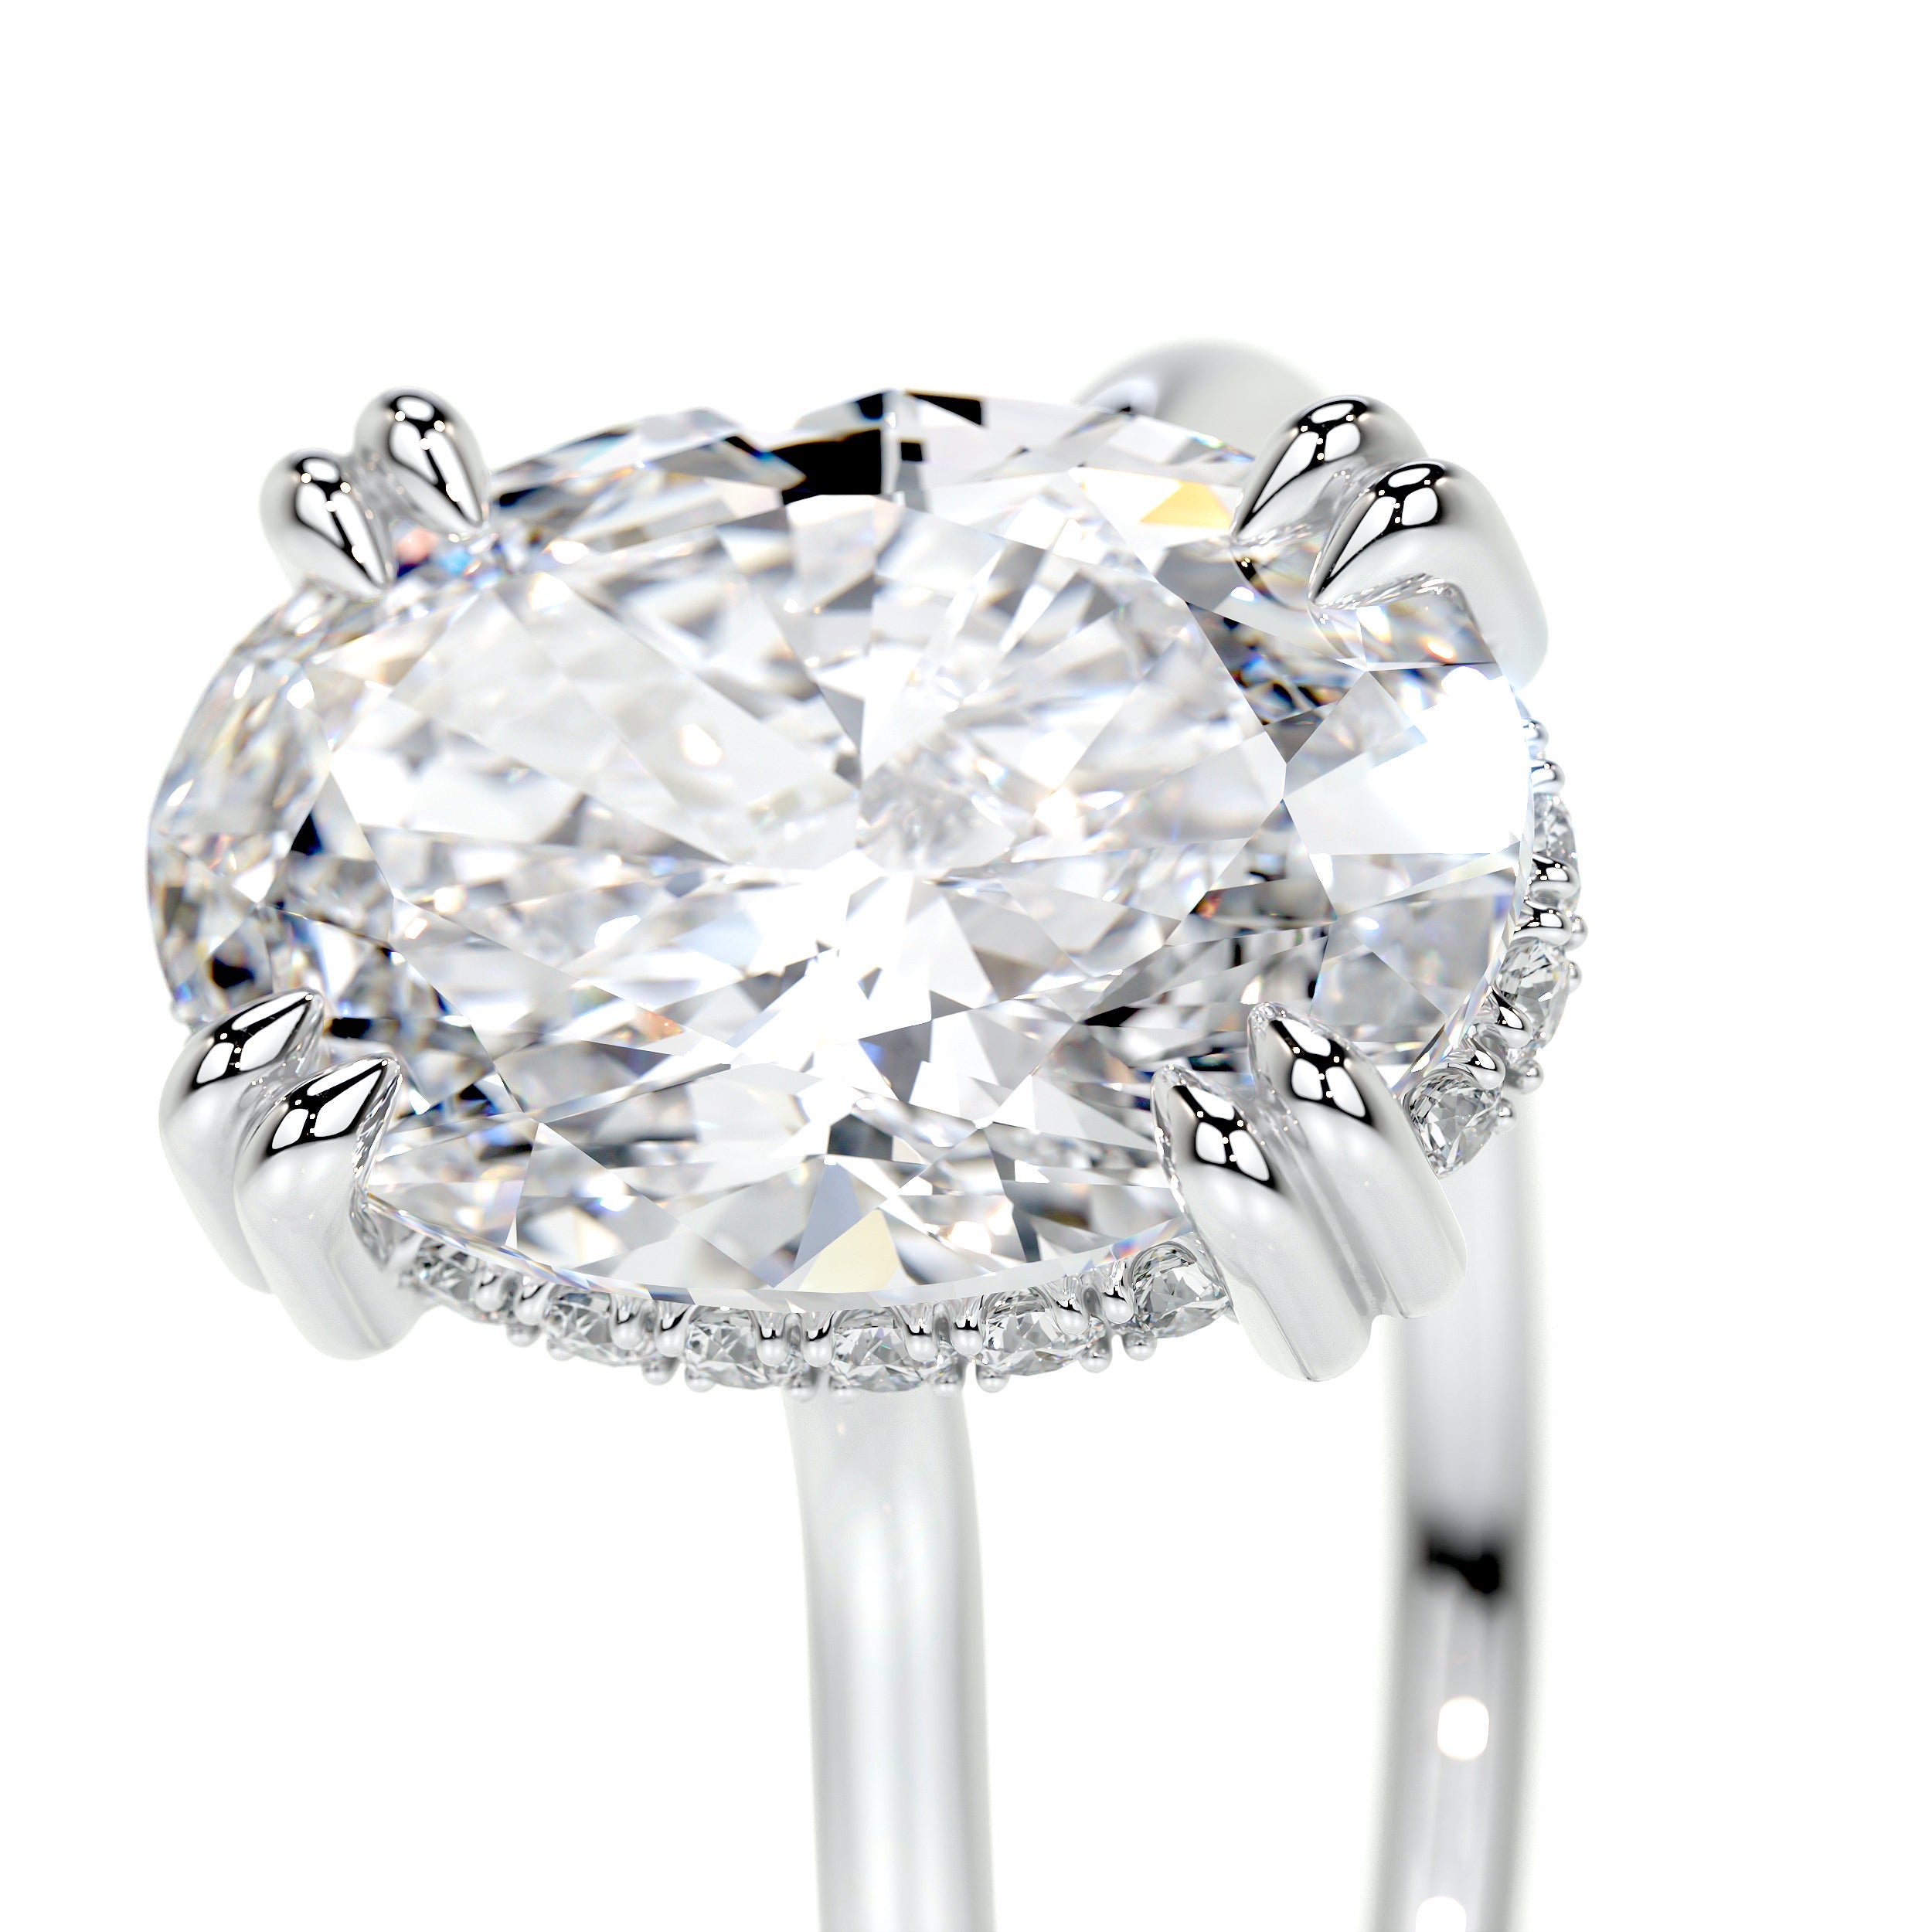 Harriet Lab Grown Diamond Ring   (3.1 Carat) -Platinum